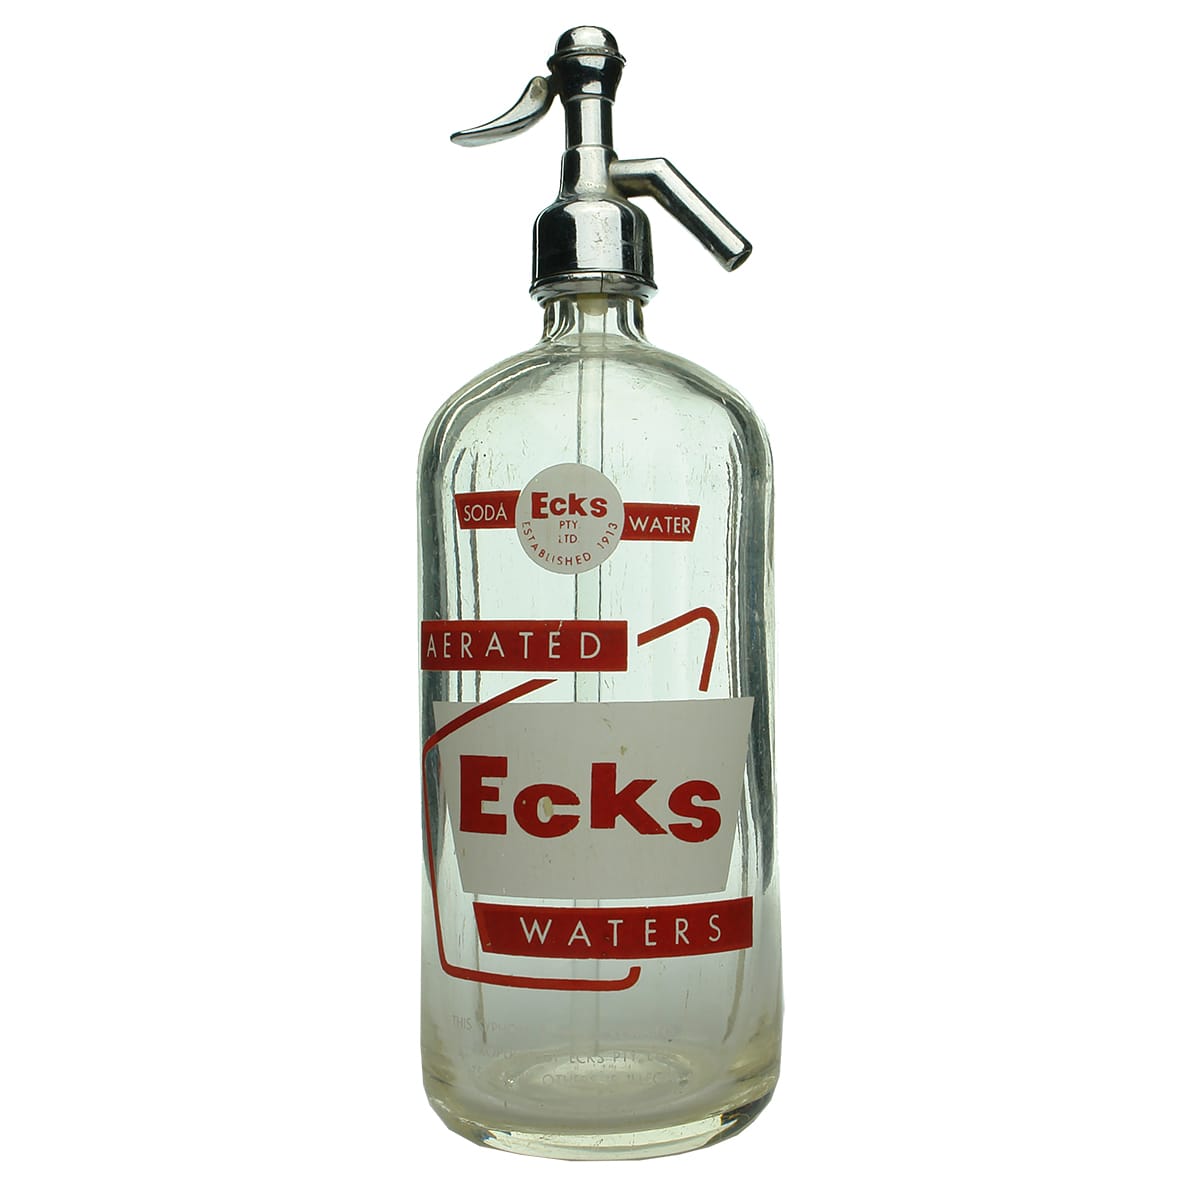 Soda Syphon. Ecks. Ceramic Label. 40 oz. (Victoria)